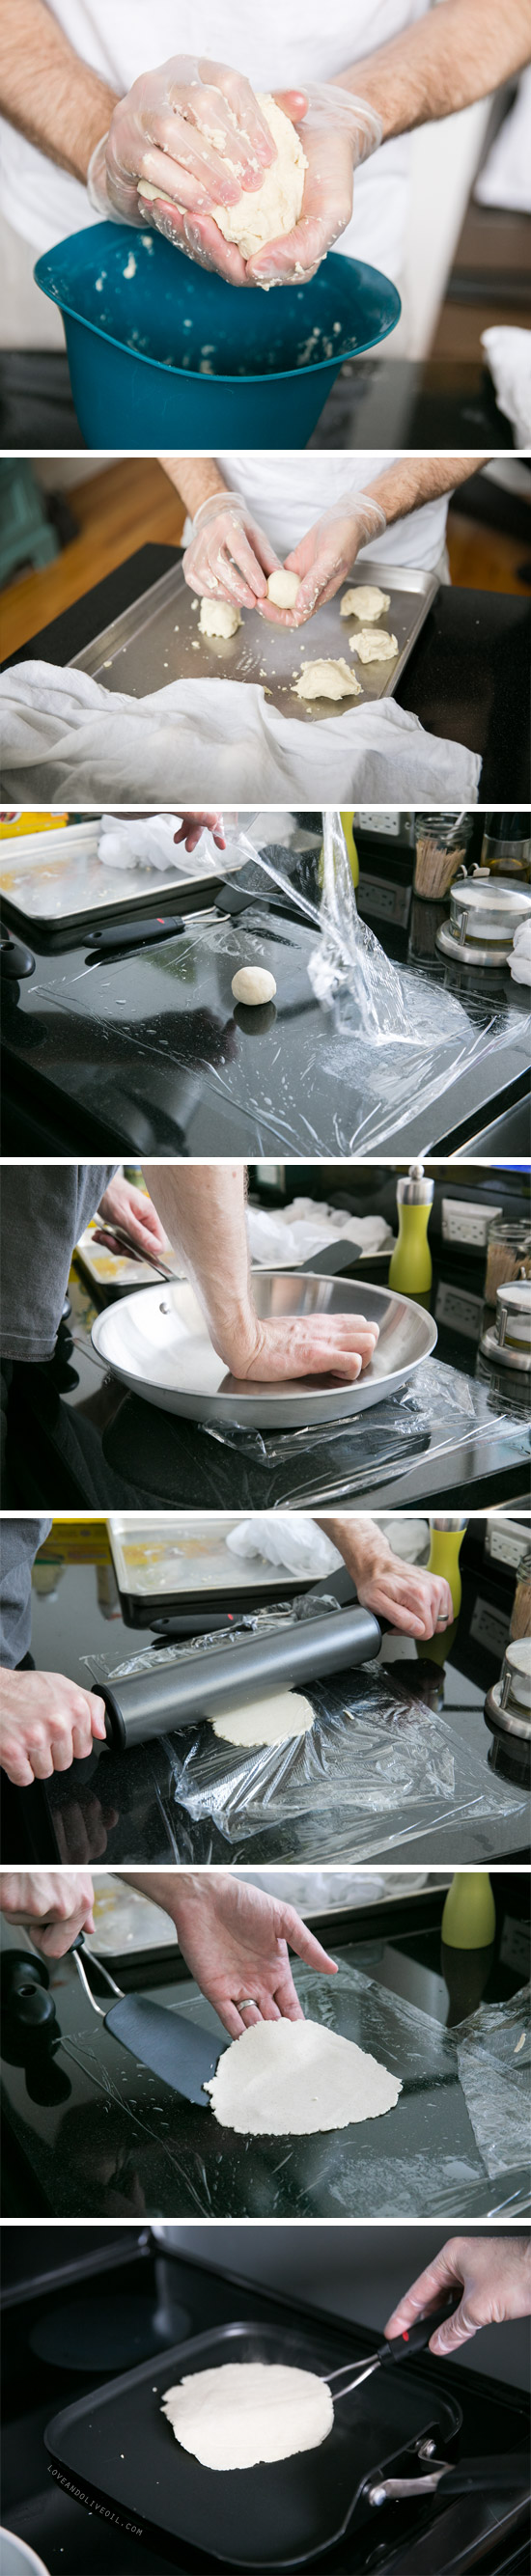 How To Make Homemade Corn Tortillas without a Tortilla Press